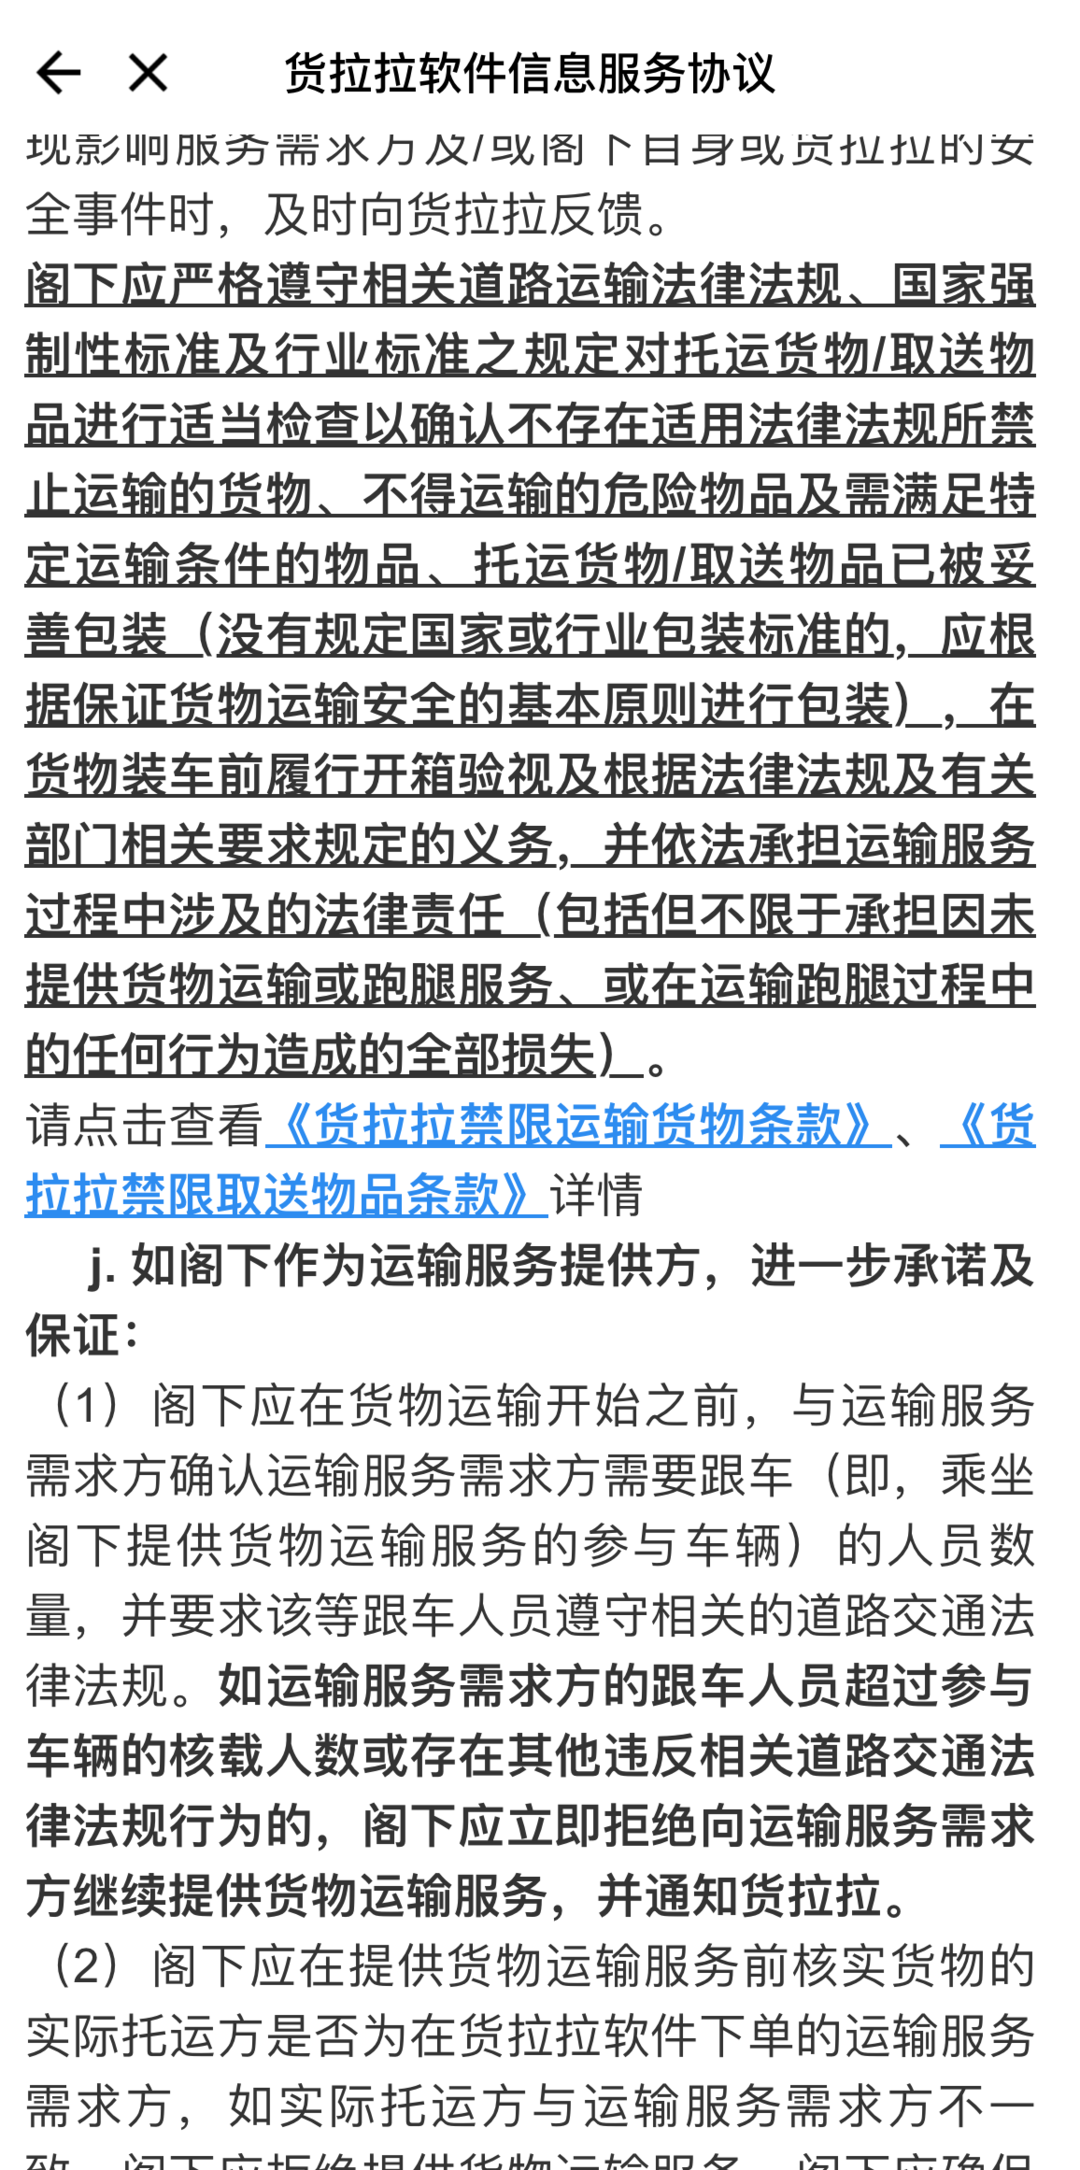 Legal obligations of displaying ads on vehicles: Huo La La platform fines driver 200 yuan